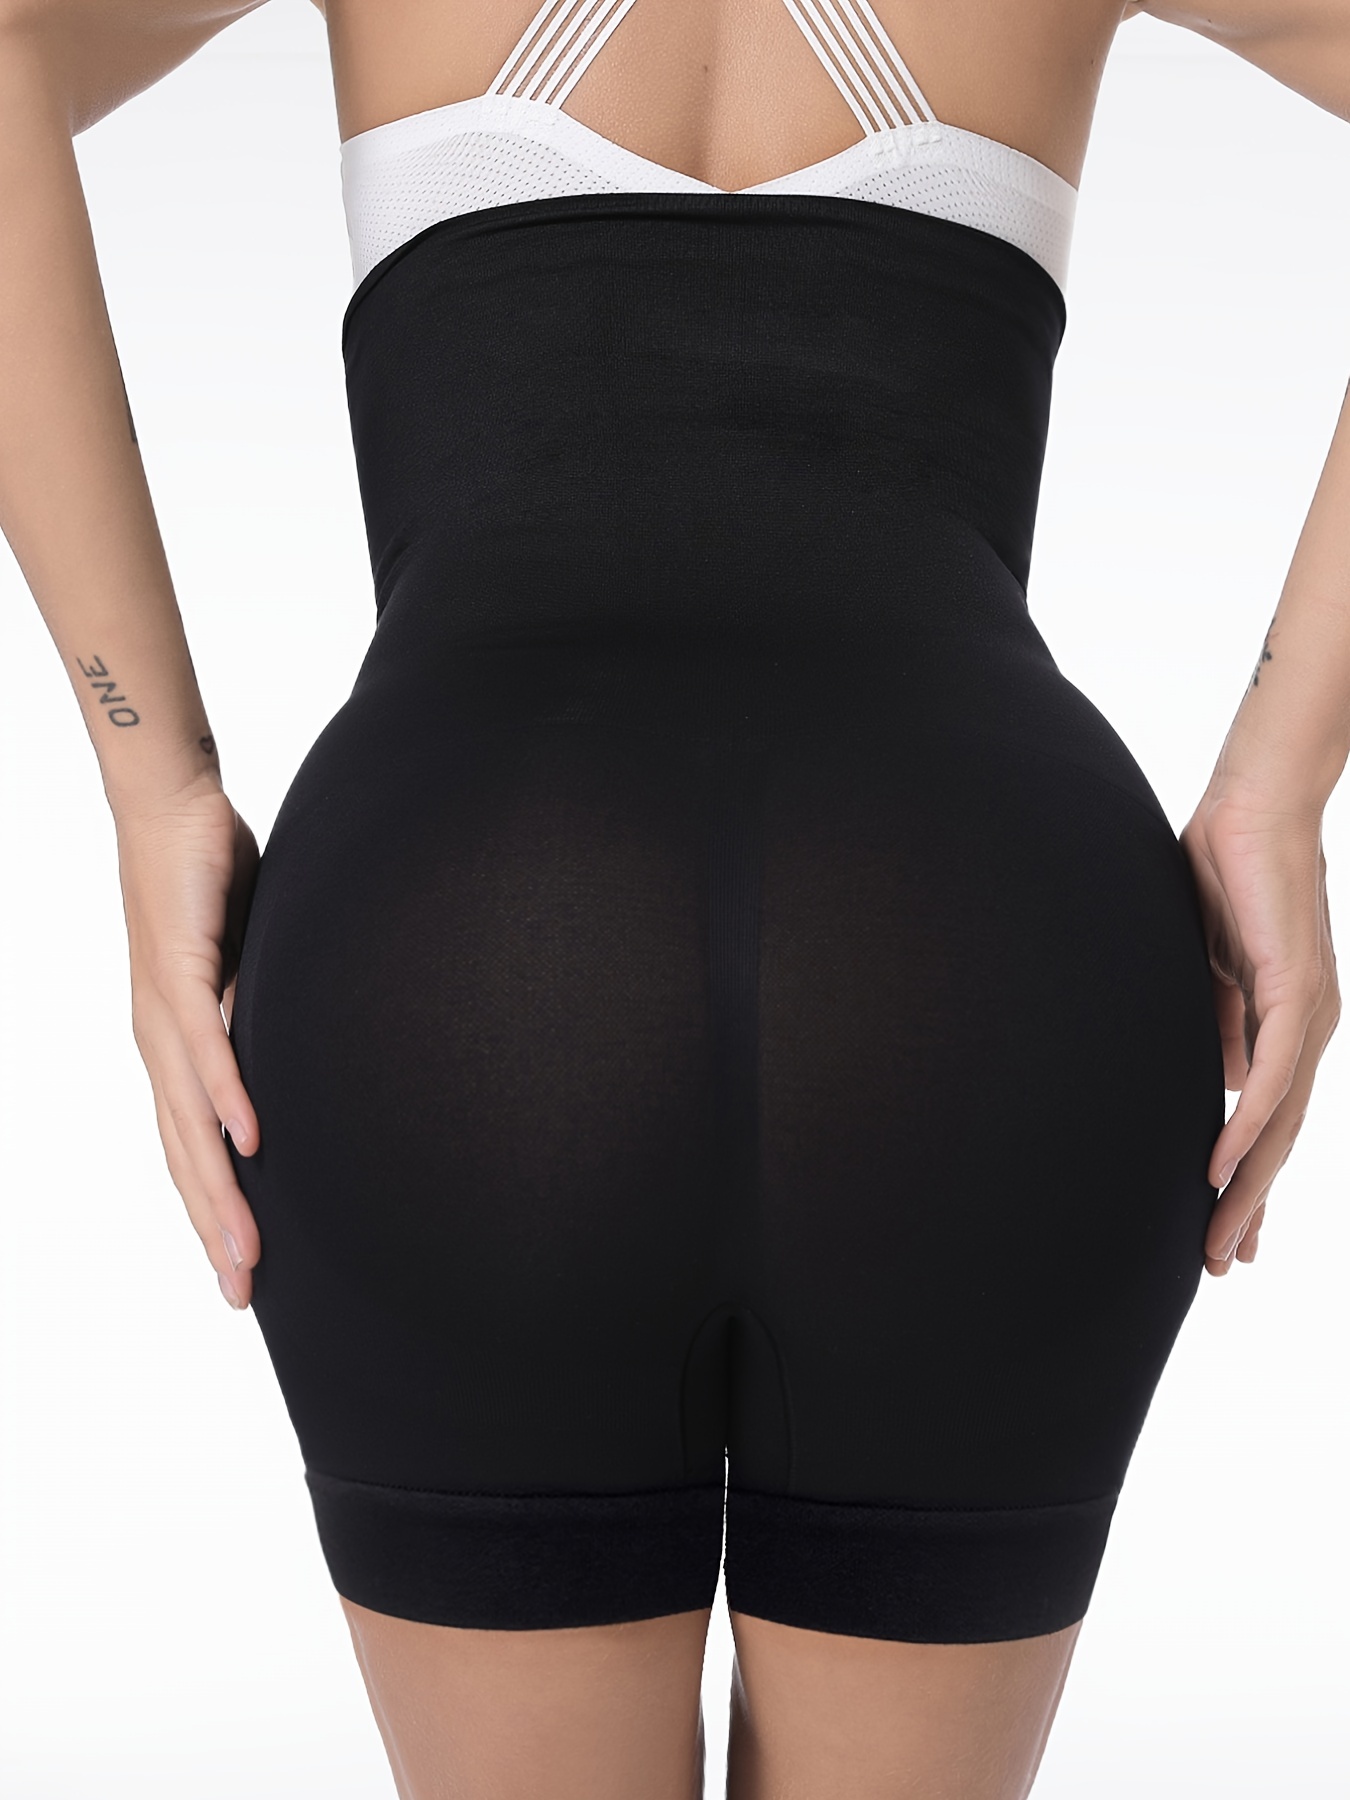 High Waisted Short, Black Comfy Tummy Control Shapewear Thigh Slimmer  Seamless For Women M/L 